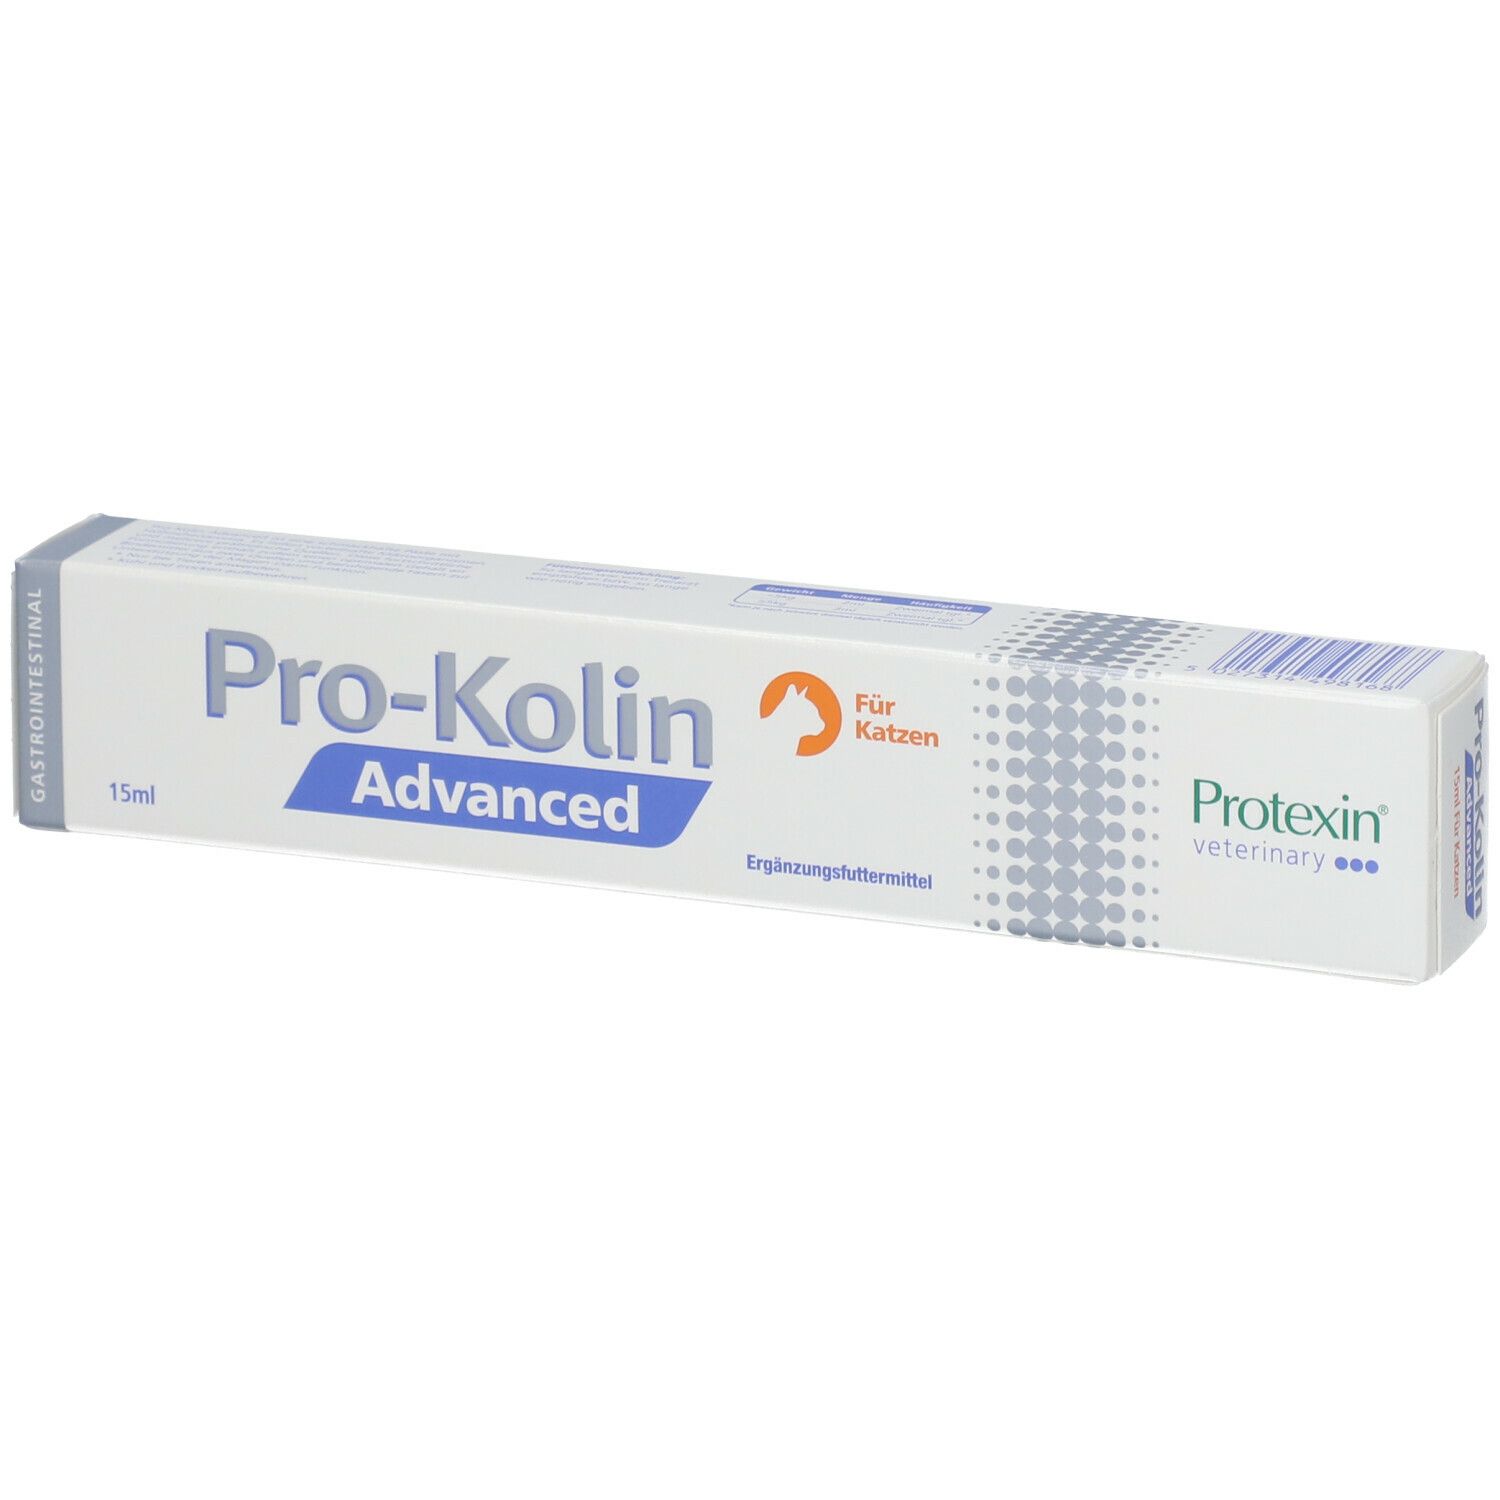 Image of Pro-Kolin Advanced